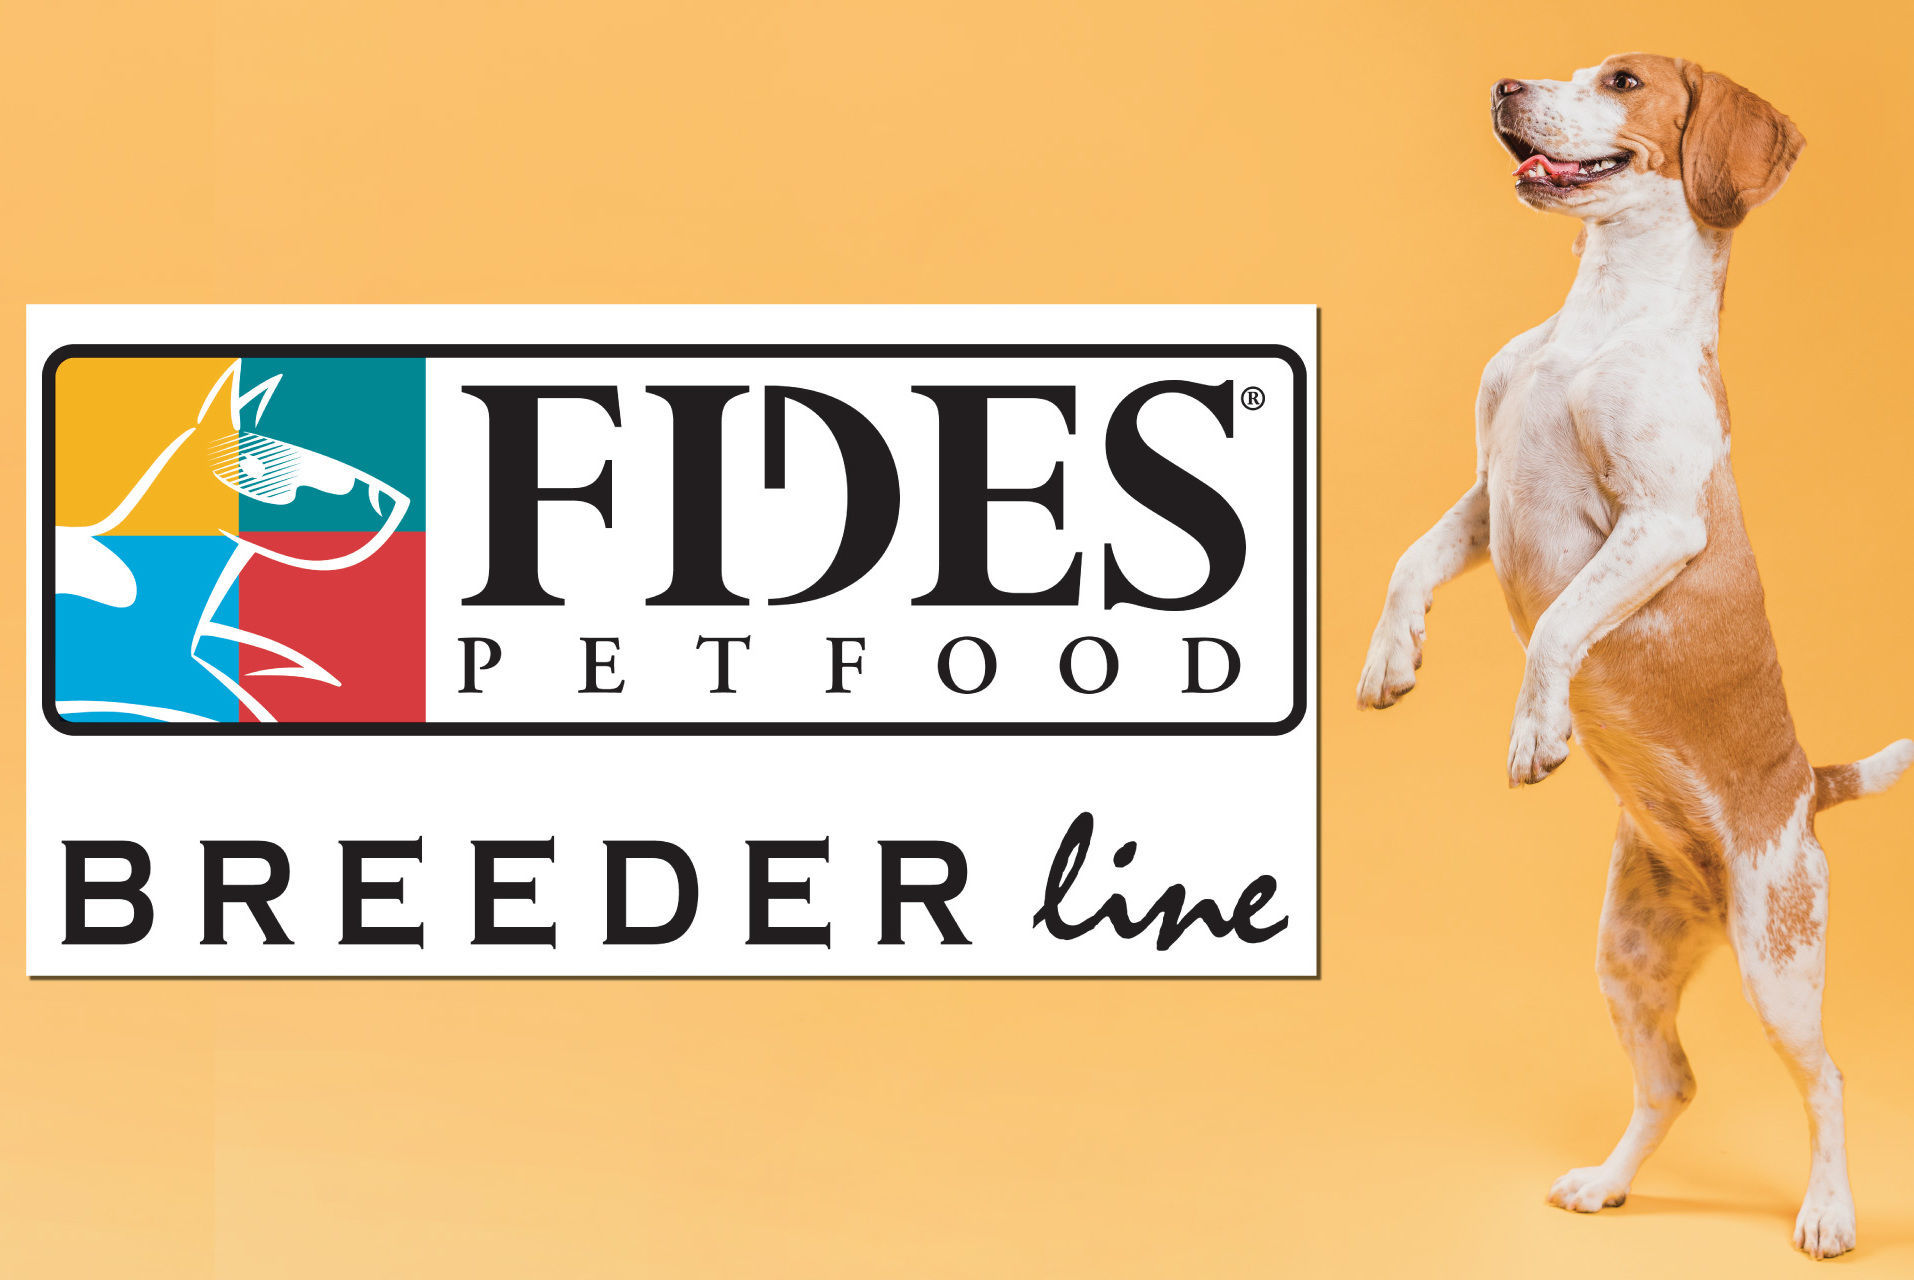 Breeder Line อาหารสุนัขบรีดเดอร์ไลน์ Breeder Line อาหารสุนัขบรีดเดอร์ไลน์  ผลิตที่ประเทศเบลเยี่ยม อาหารสุนัขนำเข้า  ในคุณภาพตามมาตรฐานยุโรป  ราคาคุ้มค่า ราคาประหยัด ราคาถูก ราคาสบายกระเป๋า